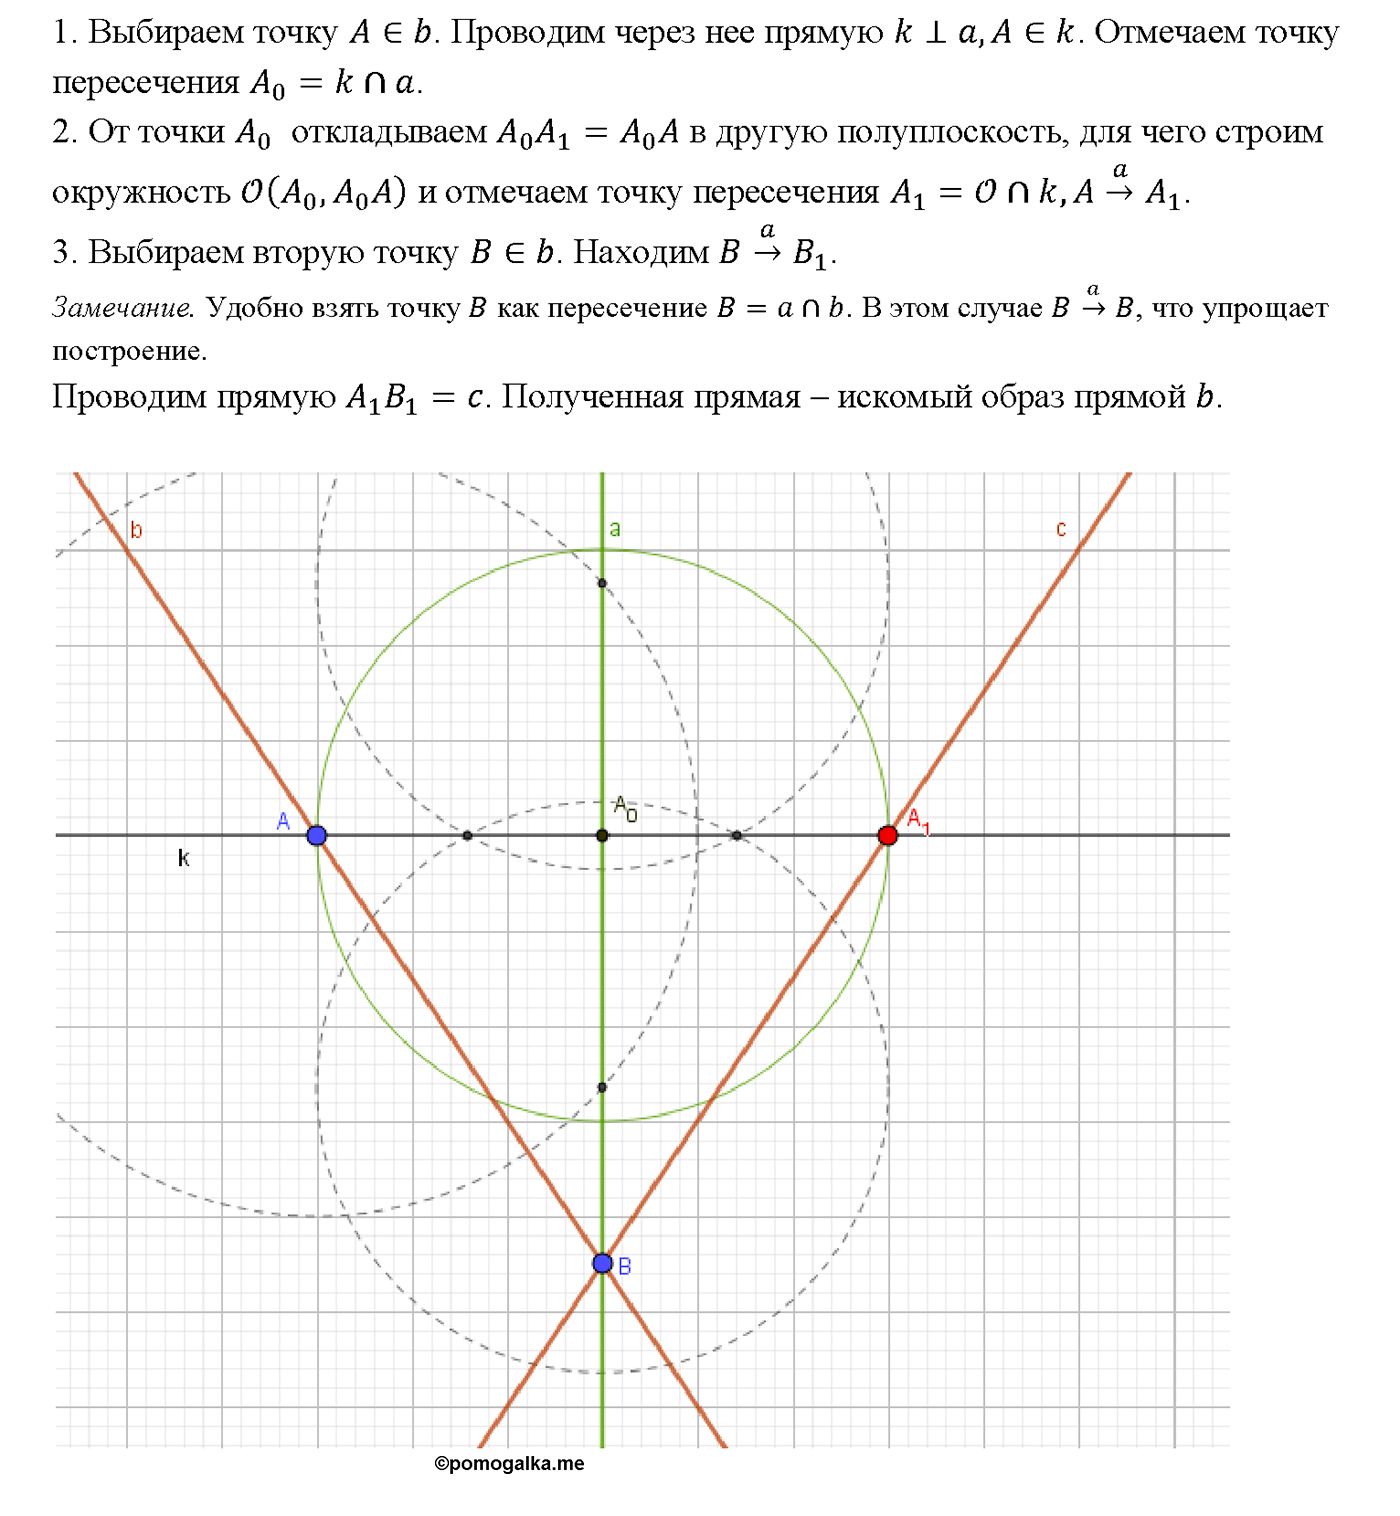 страница 293 номер 1158 геометрия 7-9 класс Атанасян учебник 2014 год